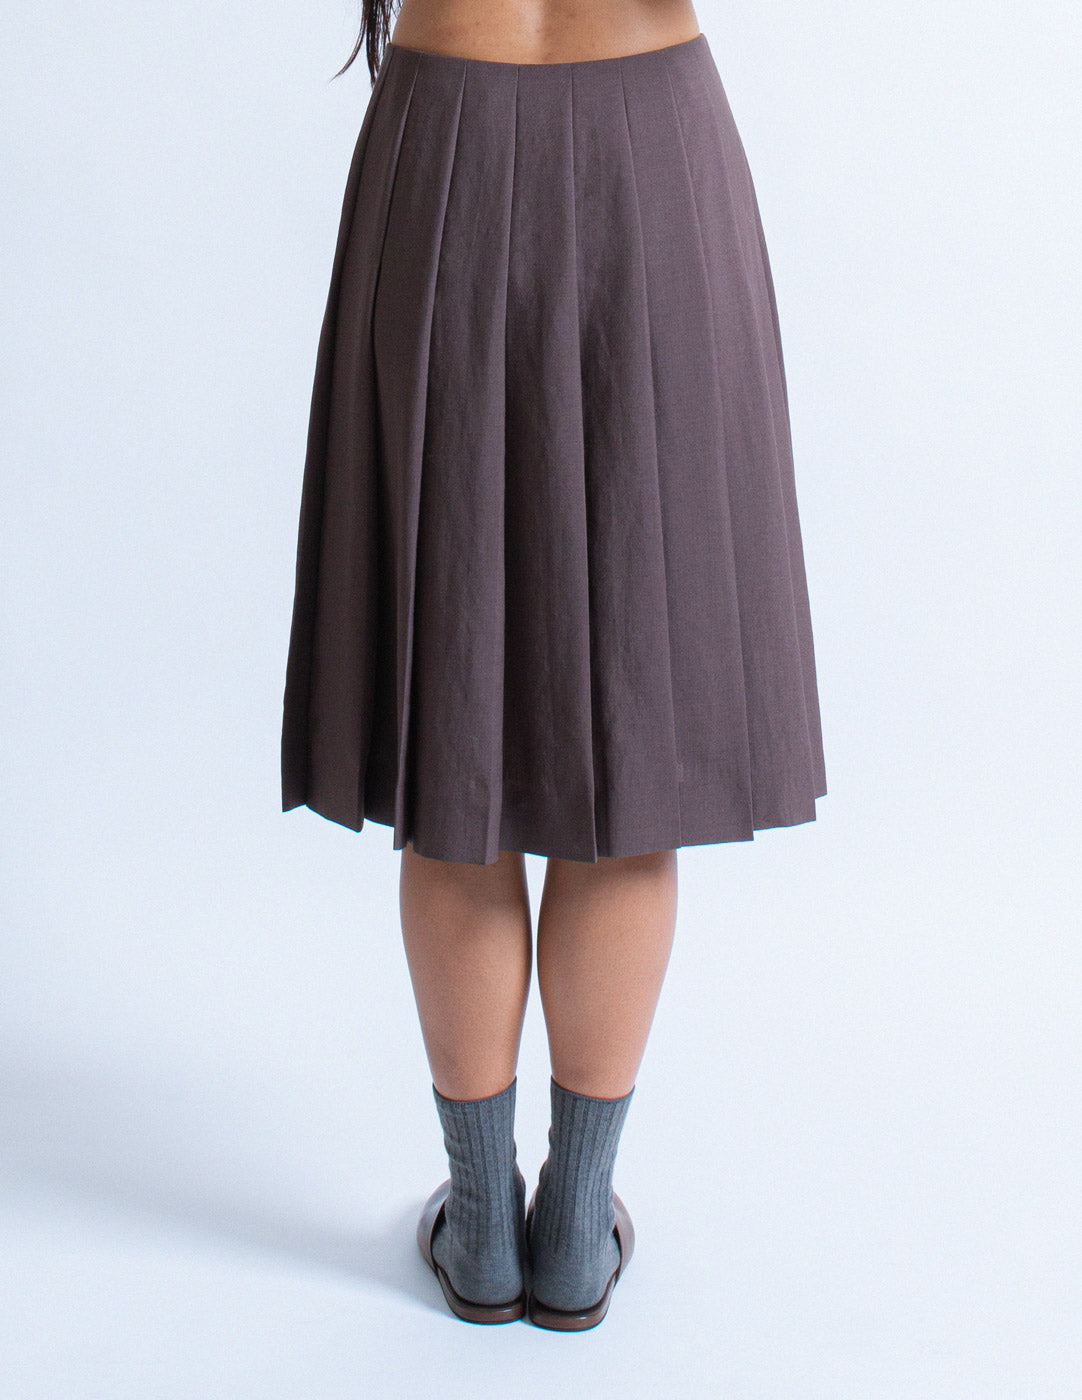 Prada gray mohair wool pleated wrap skirt back detail